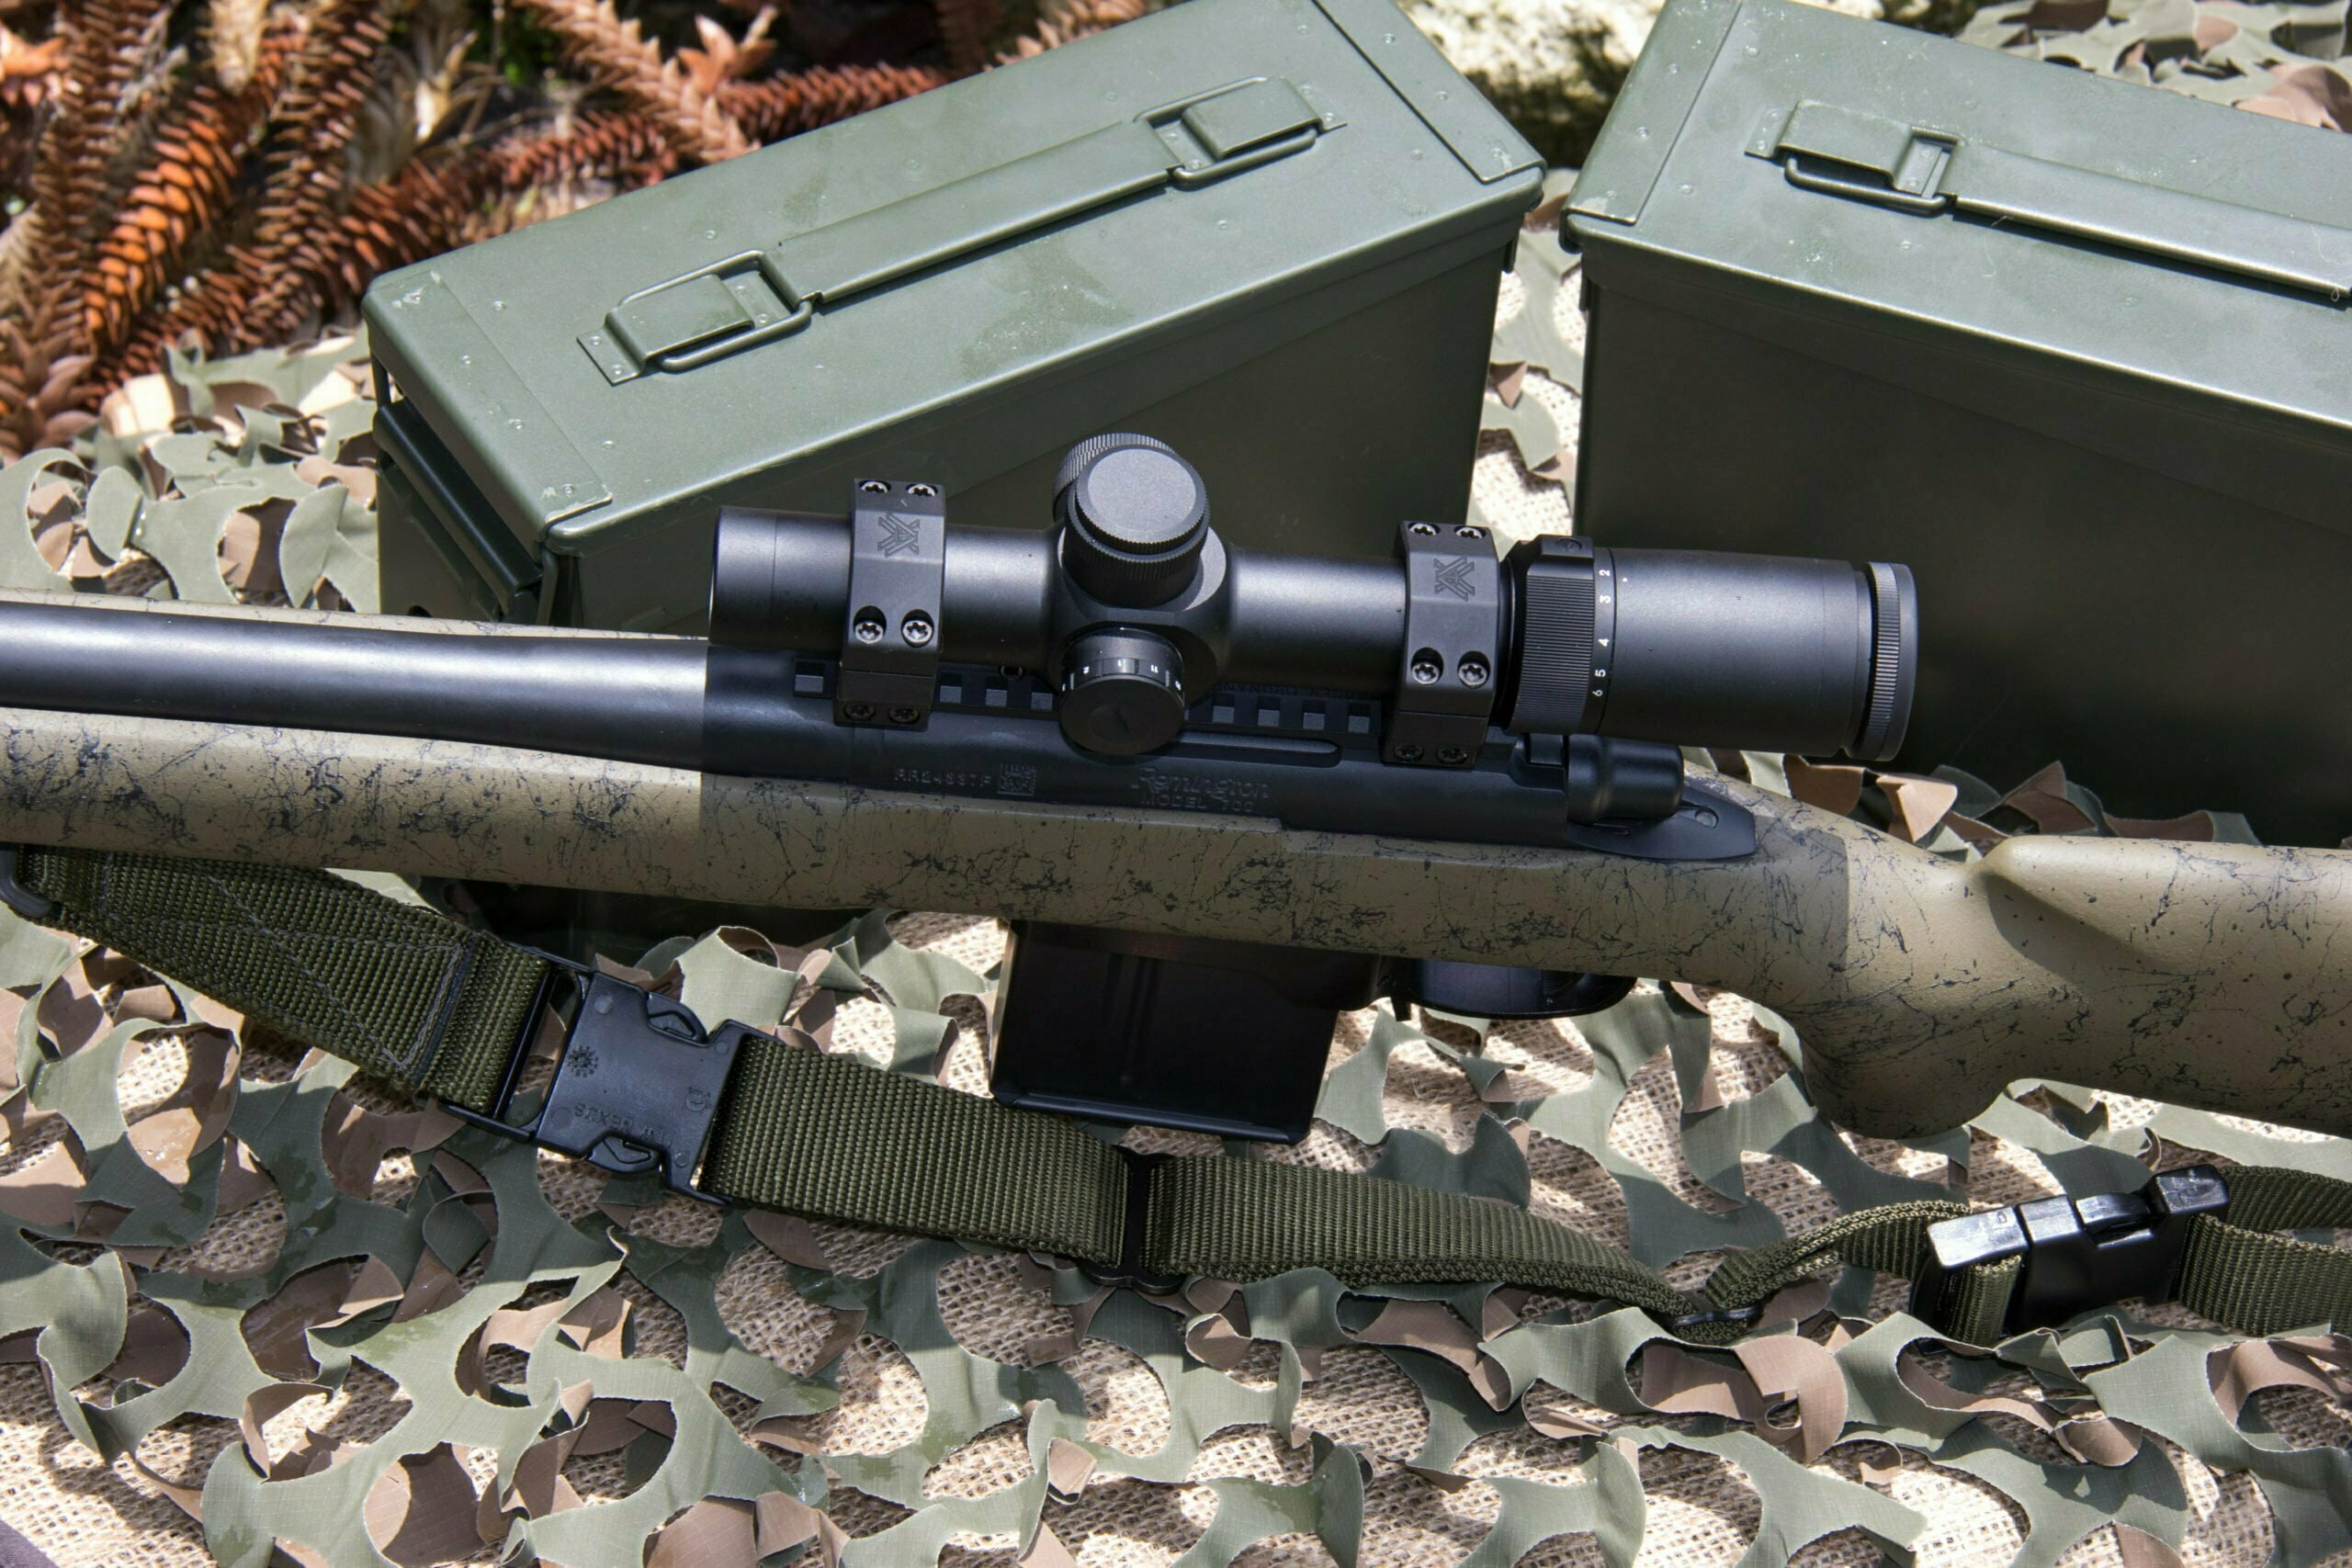 Shepherd Phantom T1 1x6-24 CQB Tactical Rifle Scope Mounted on Remington 700. Good out to 1000 yards!